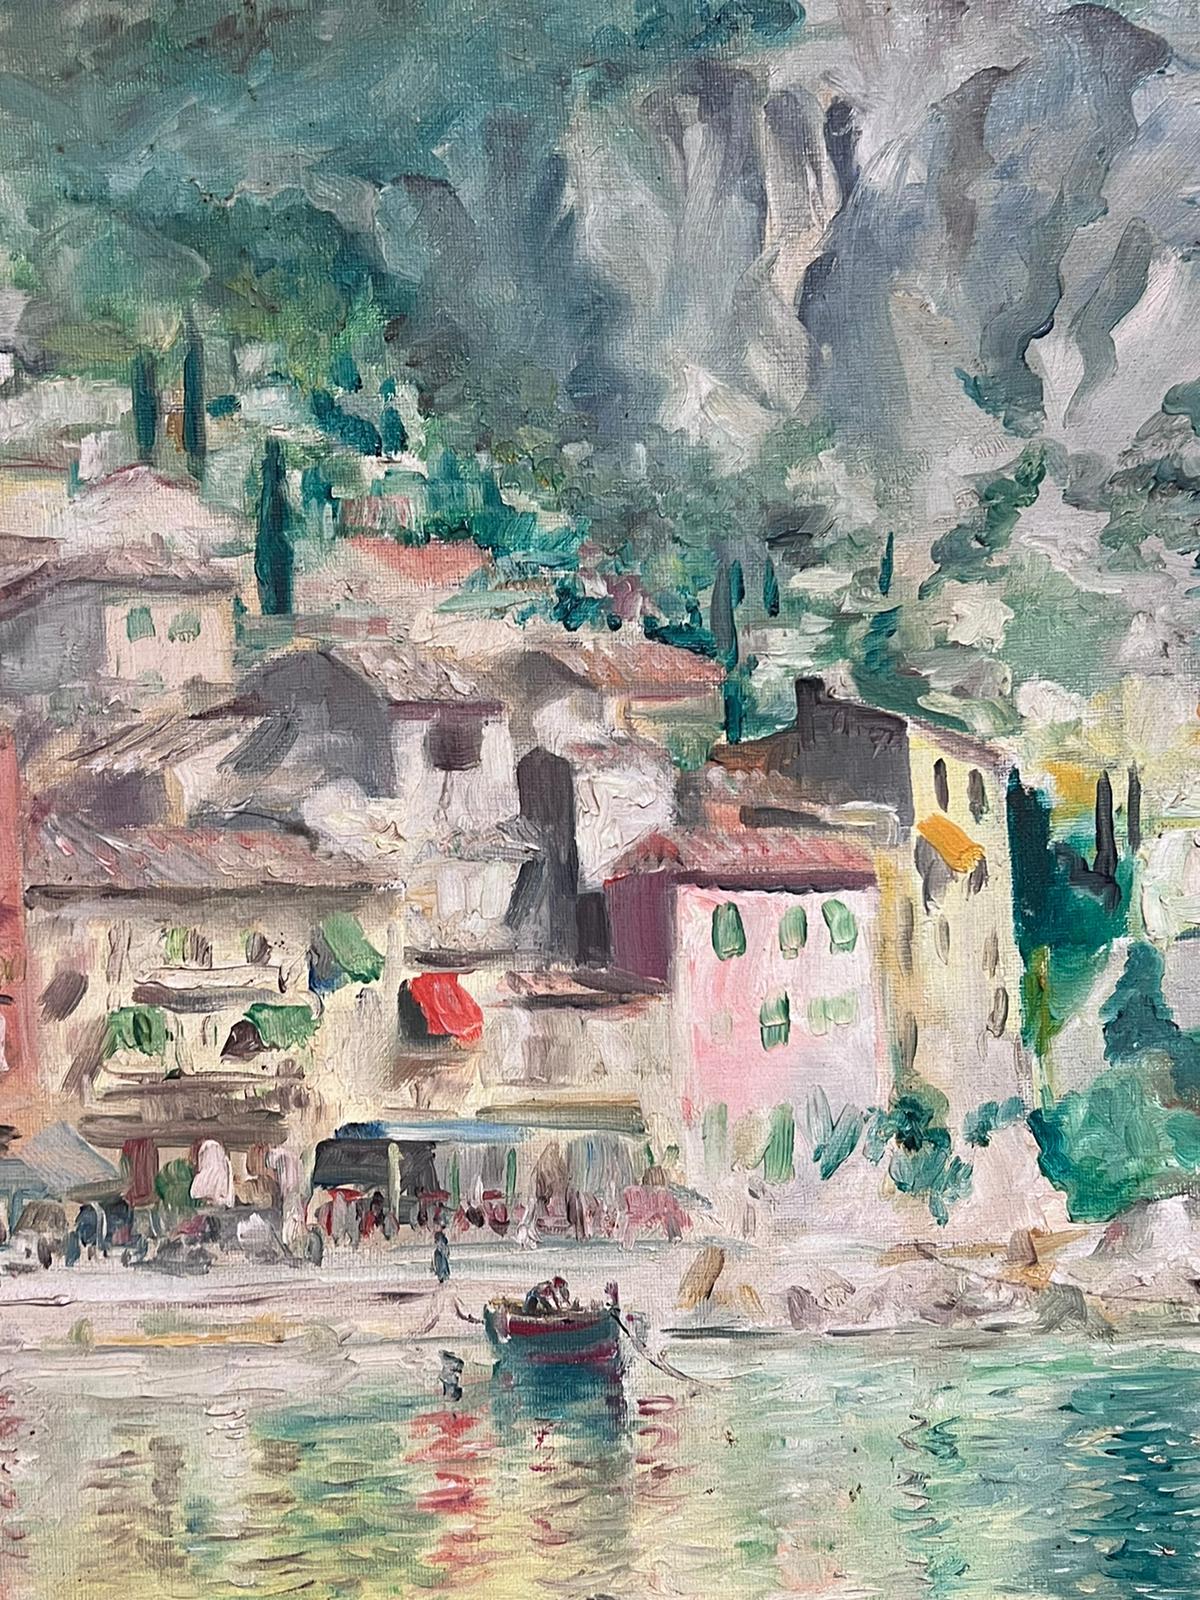 Peinture à l'huile italienne du milieu du siècle dernier « The Italian Riviera Coastal Town on Sea » signée - Painting de Italian 1950's